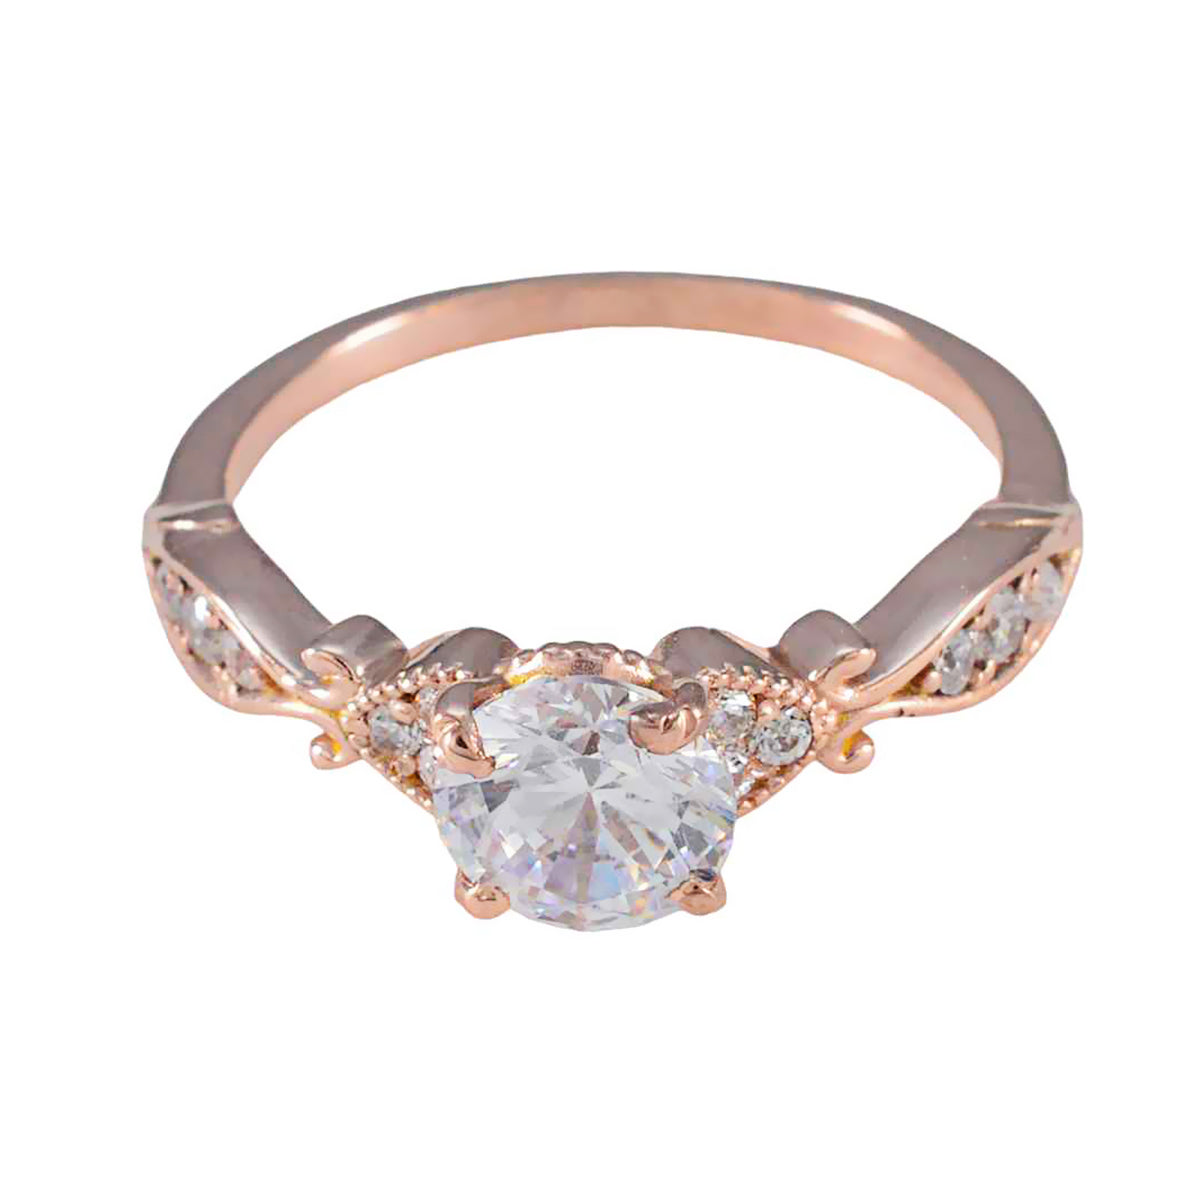 Riyo Bulk Silver Ring With Rose Gold Plating White CZ Stone Round Shape Prong Setting  Jewelry Birthday Ring